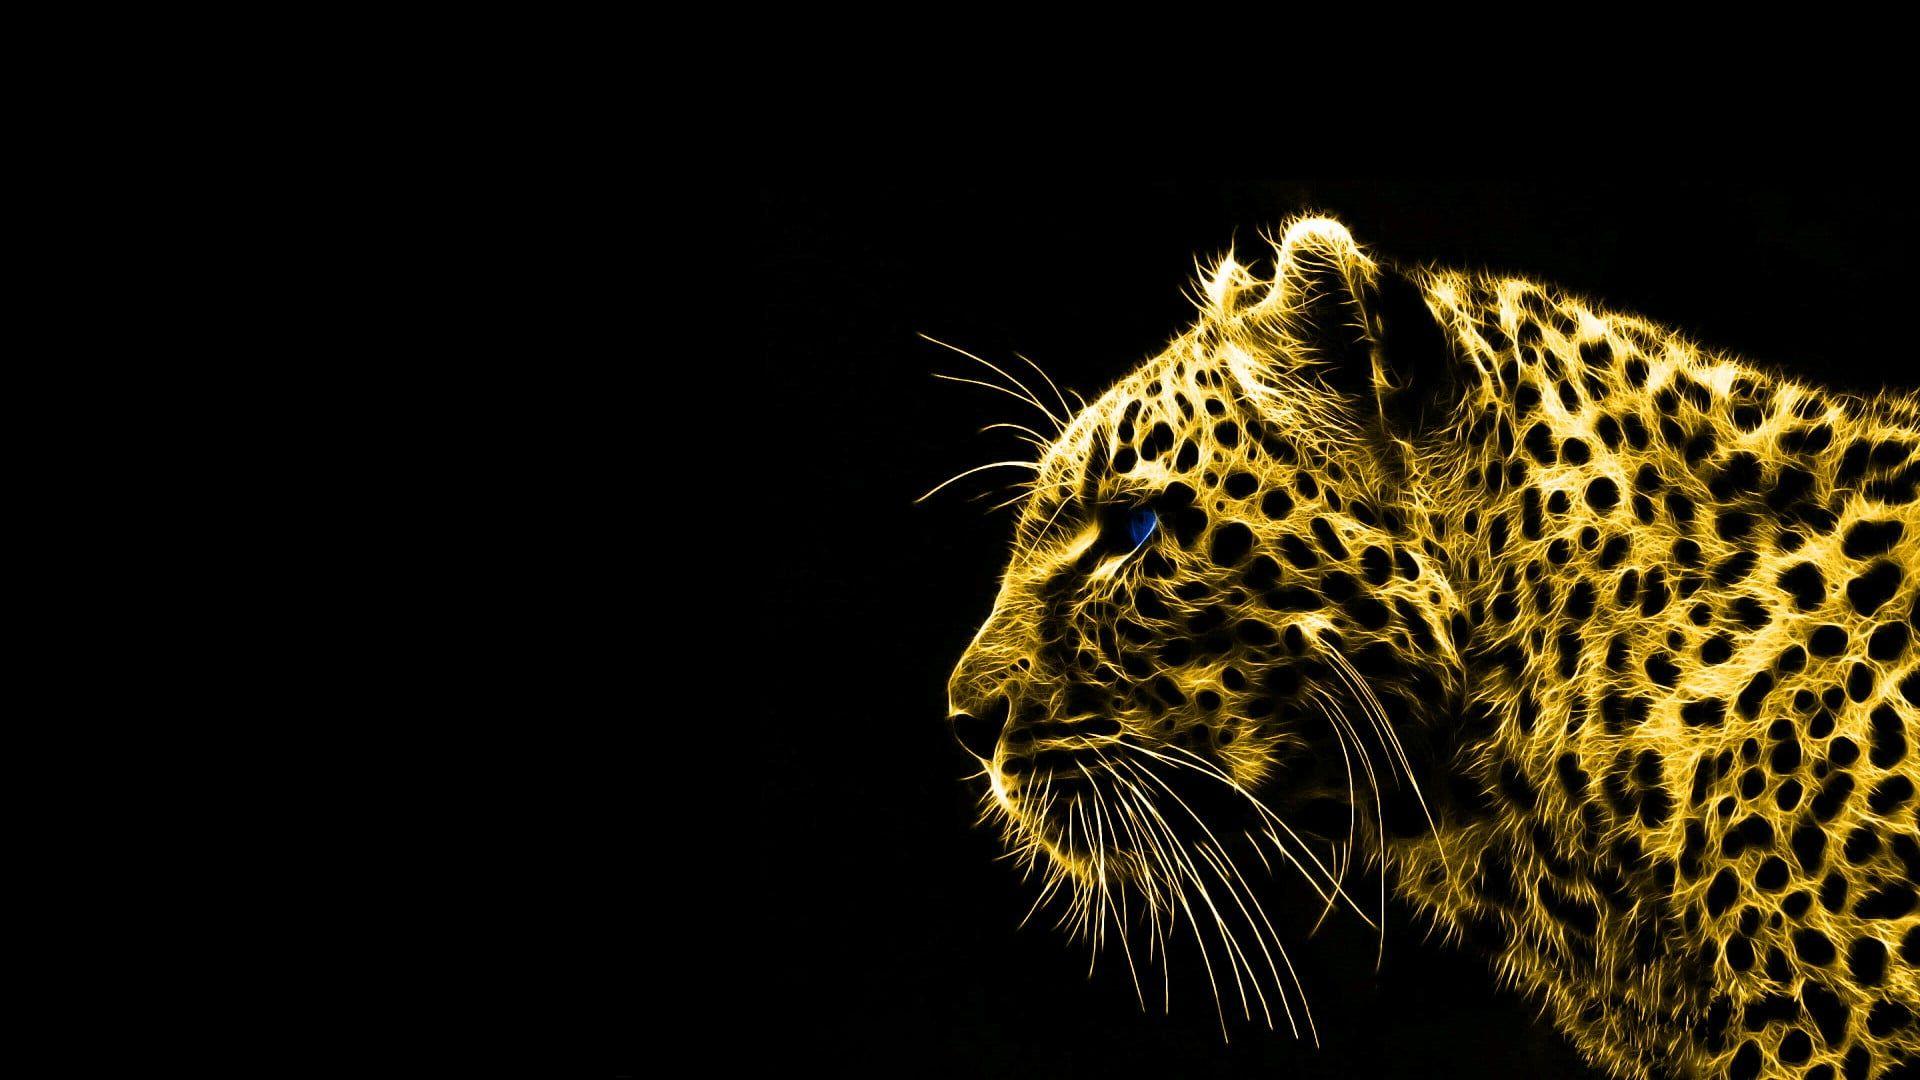 Black Cheetah Wallpapers - Top Free Black Cheetah Backgrounds